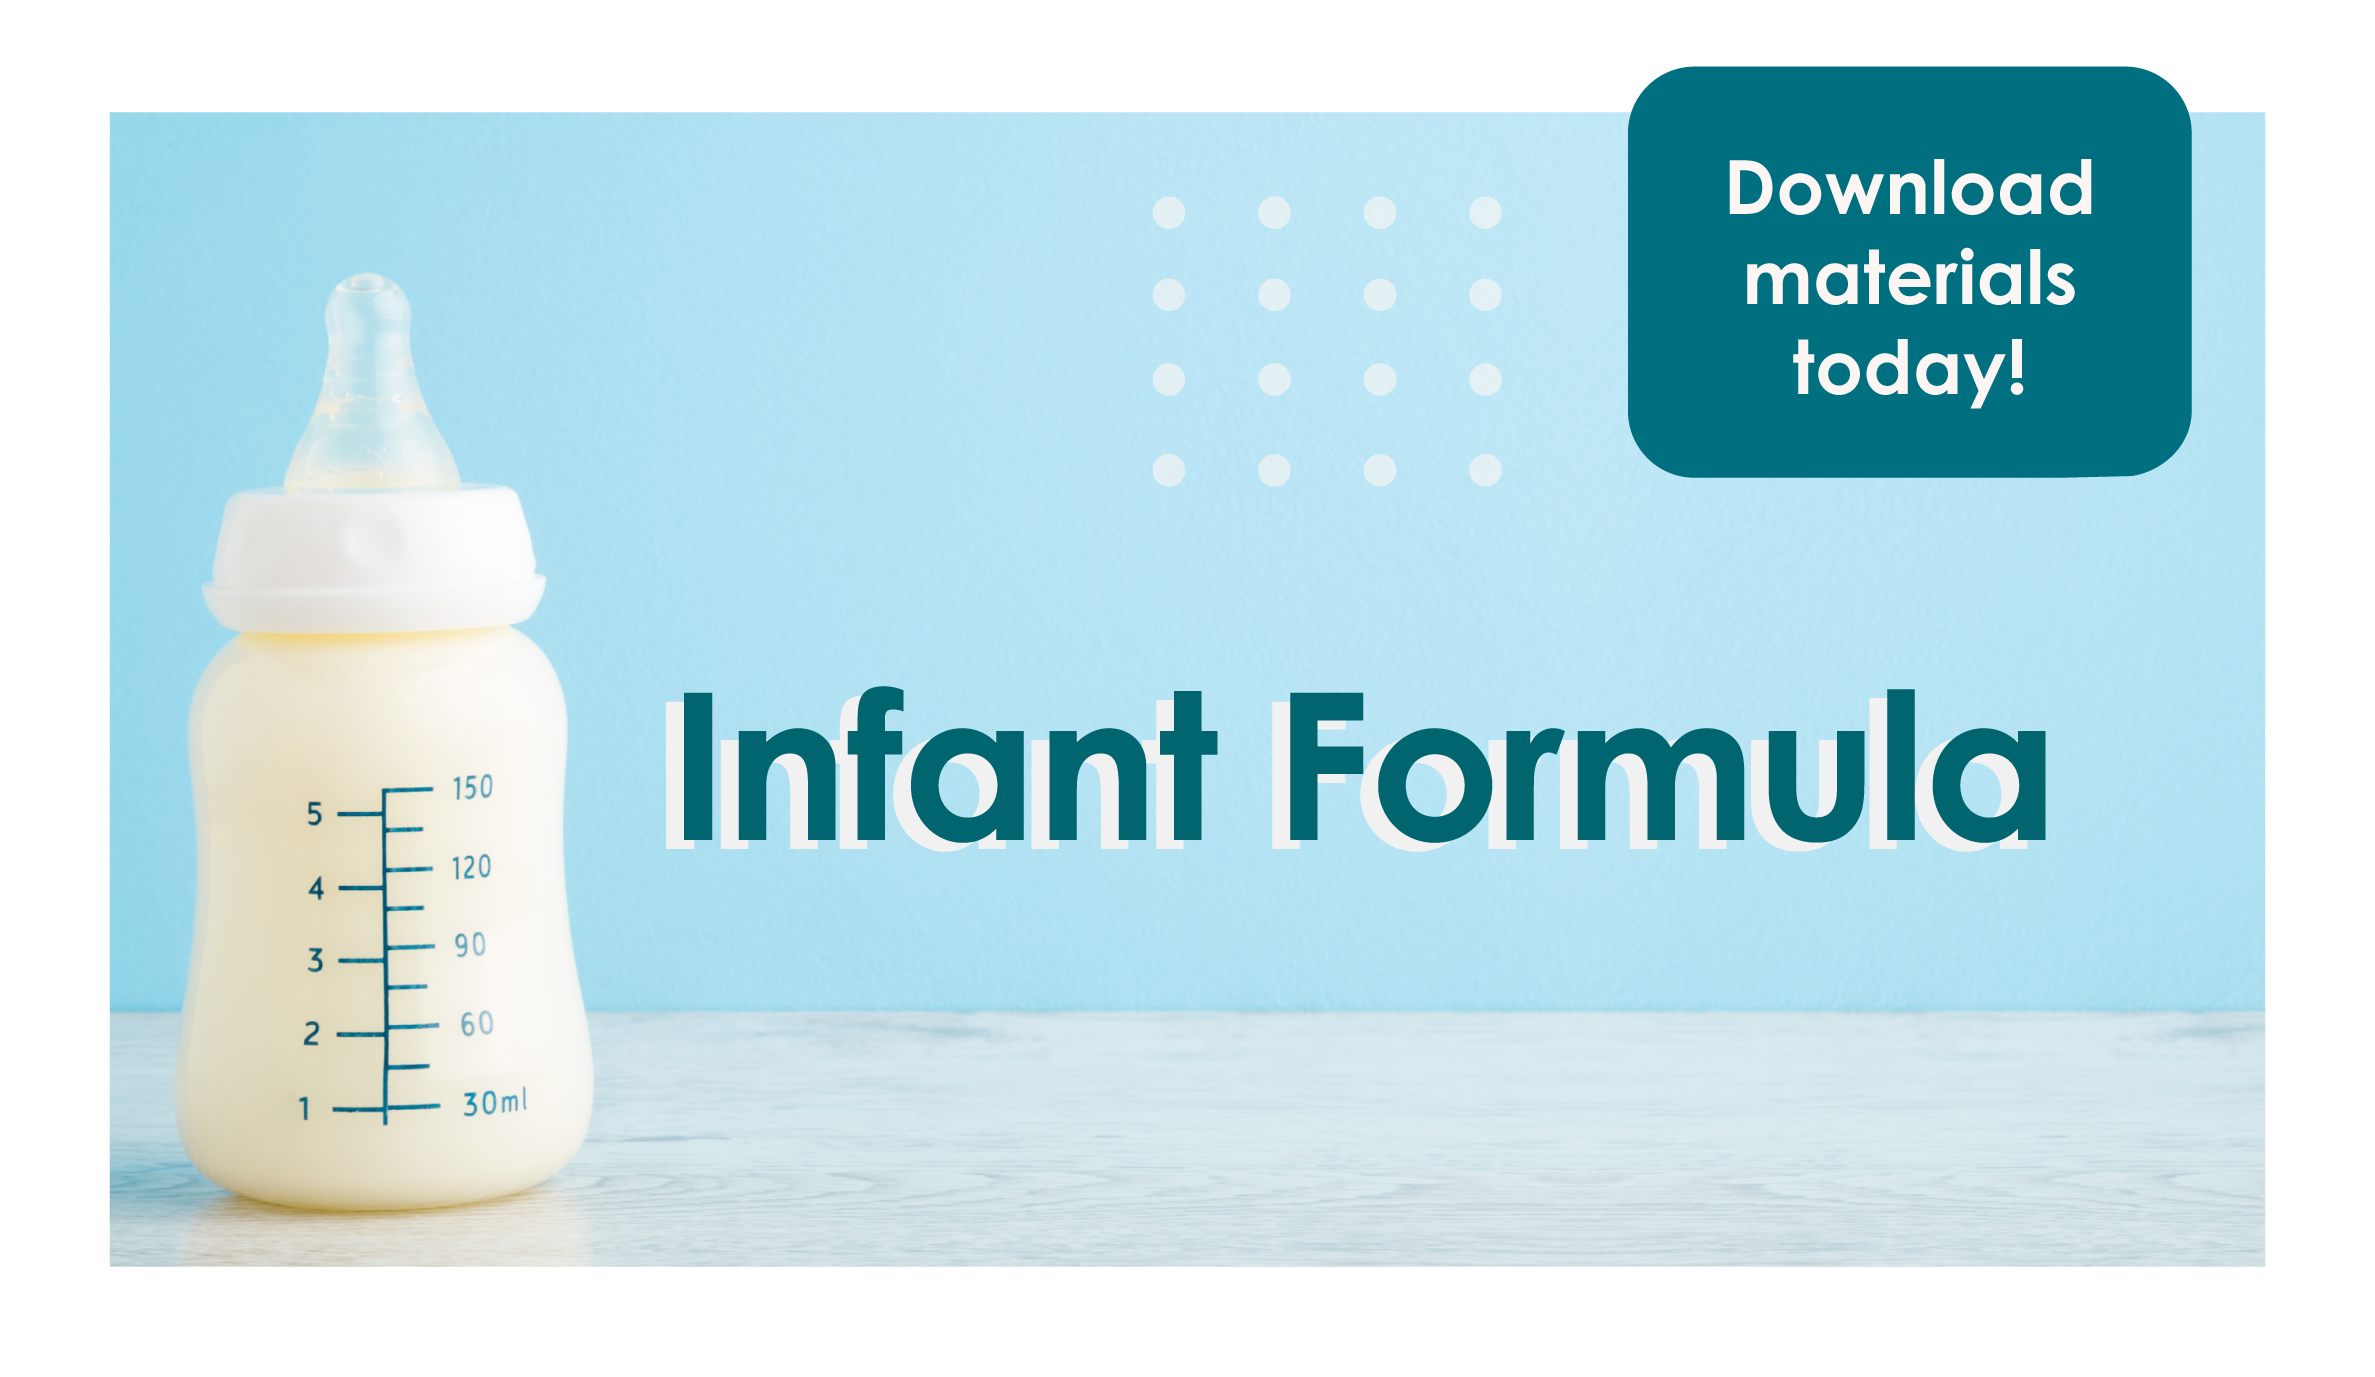 Infant formula: download materials today!